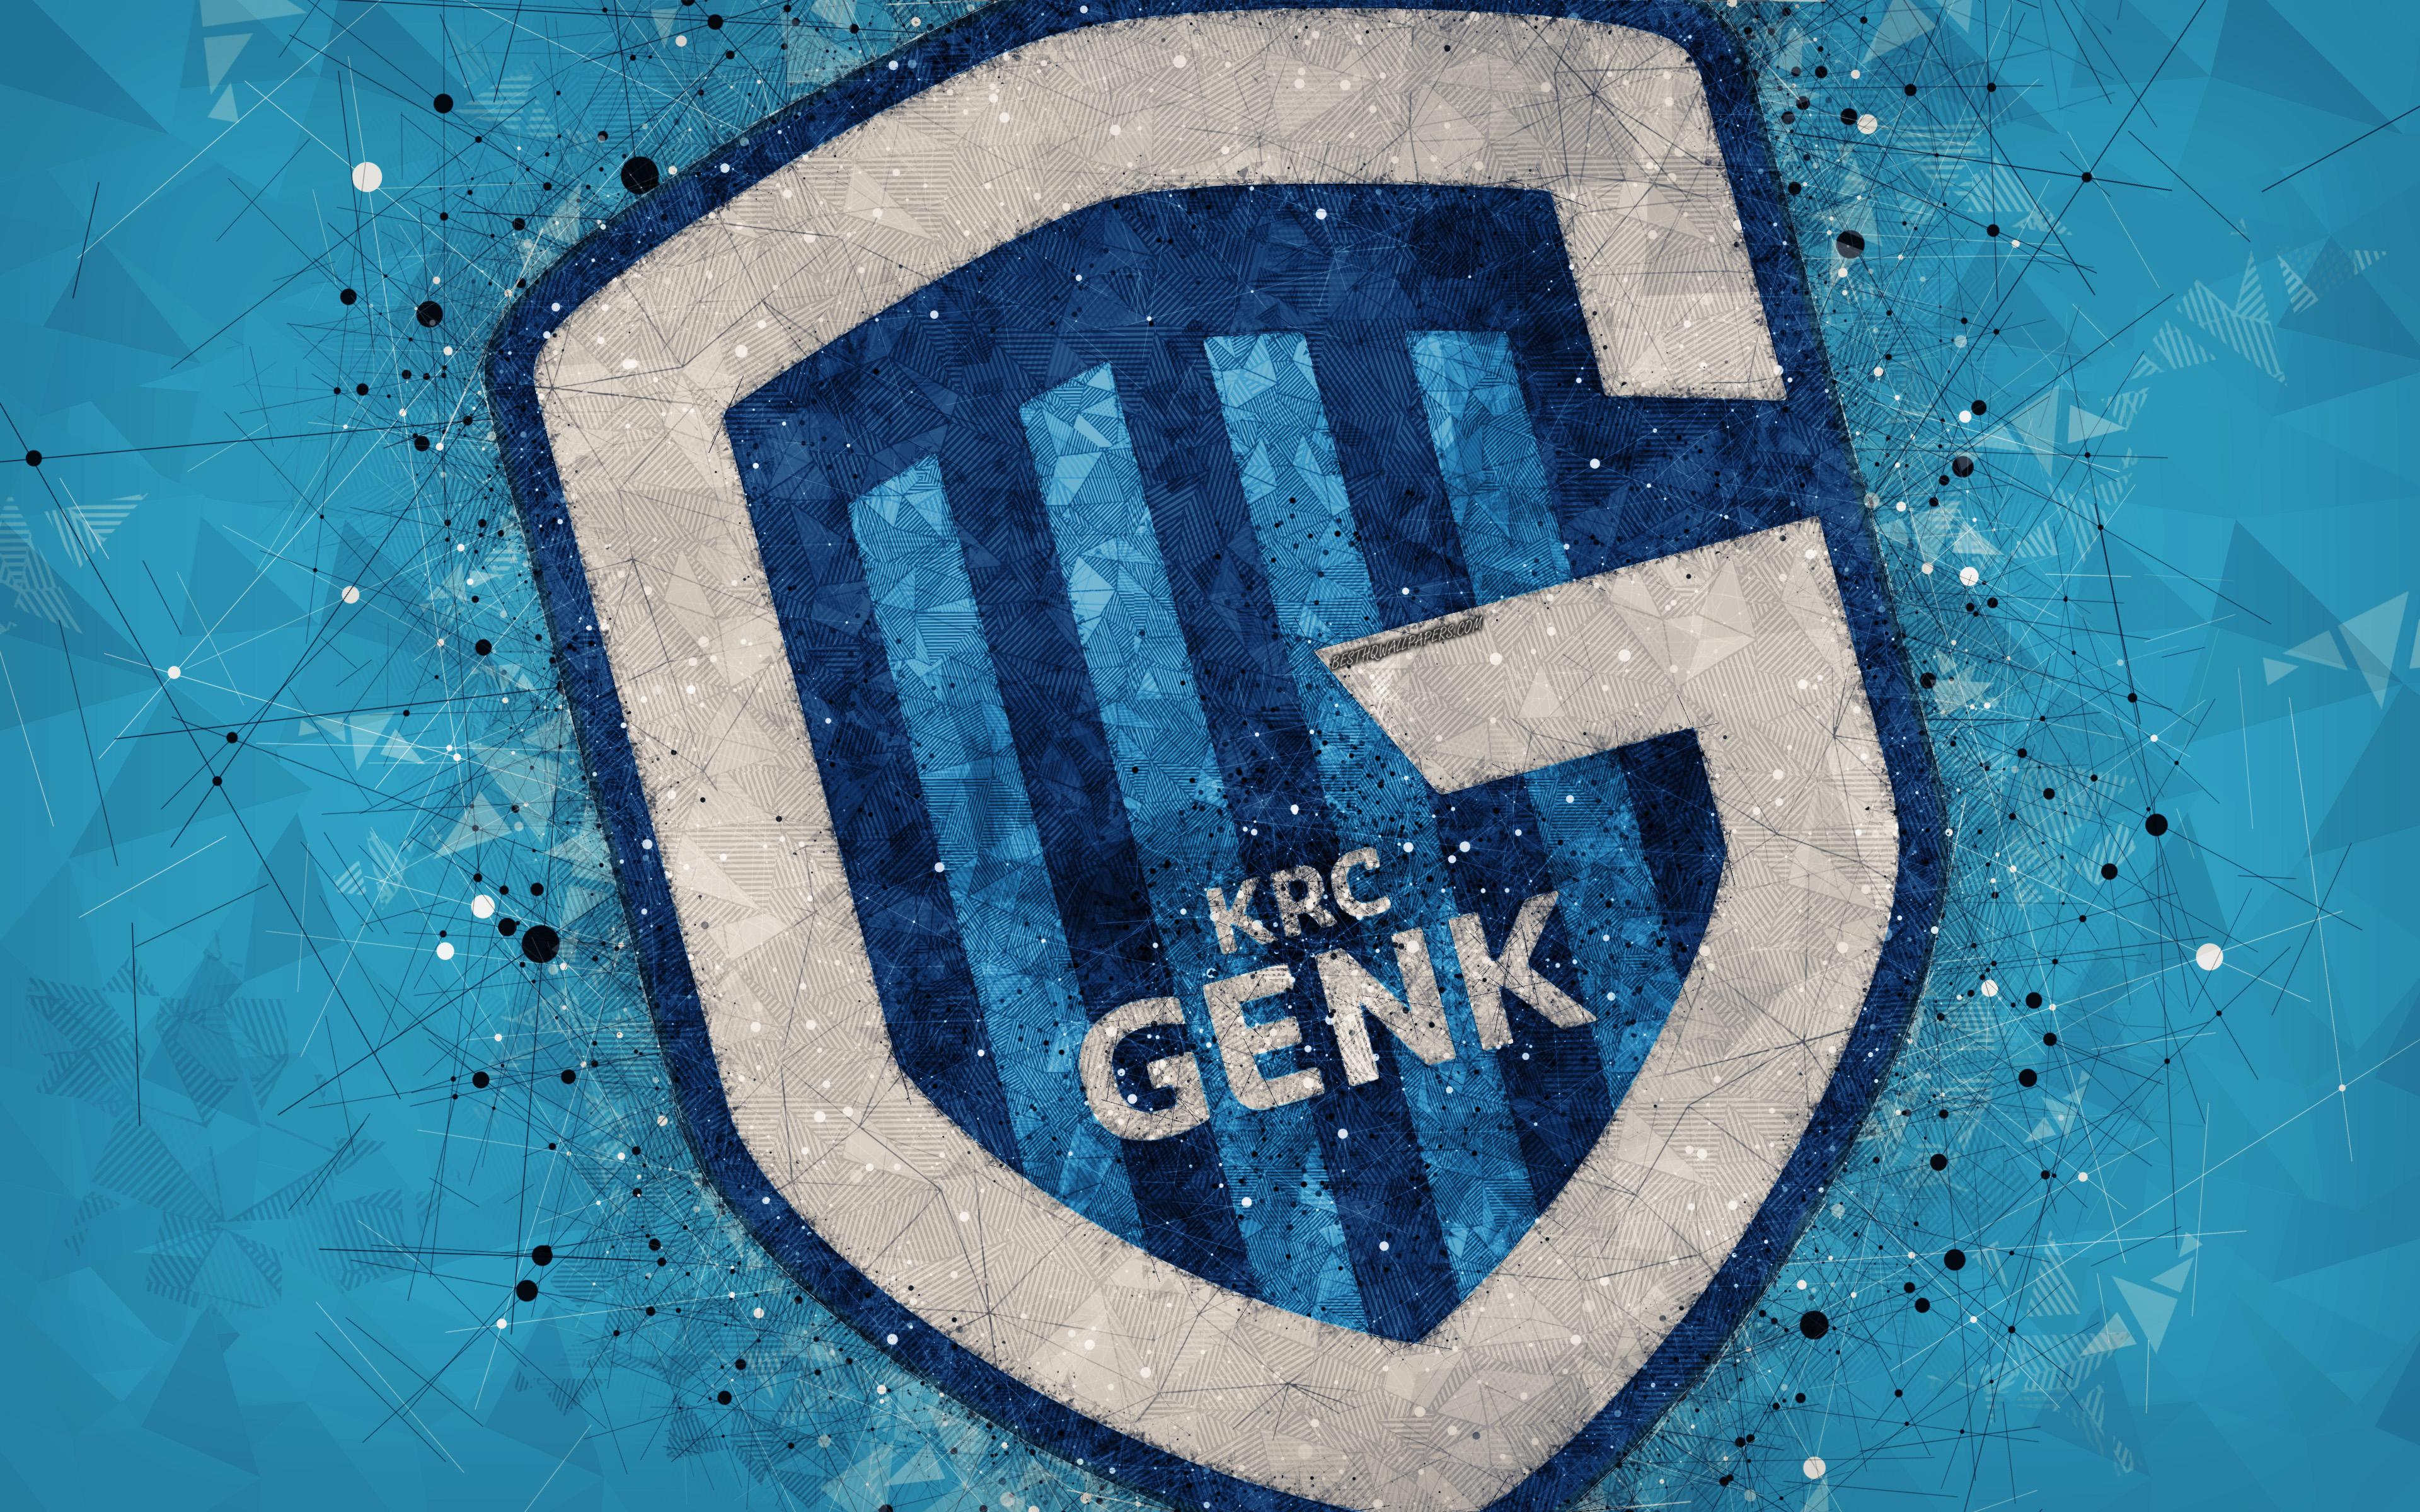 Download wallpaper KRC Genk, 4k, geometric art, logo, Belgian